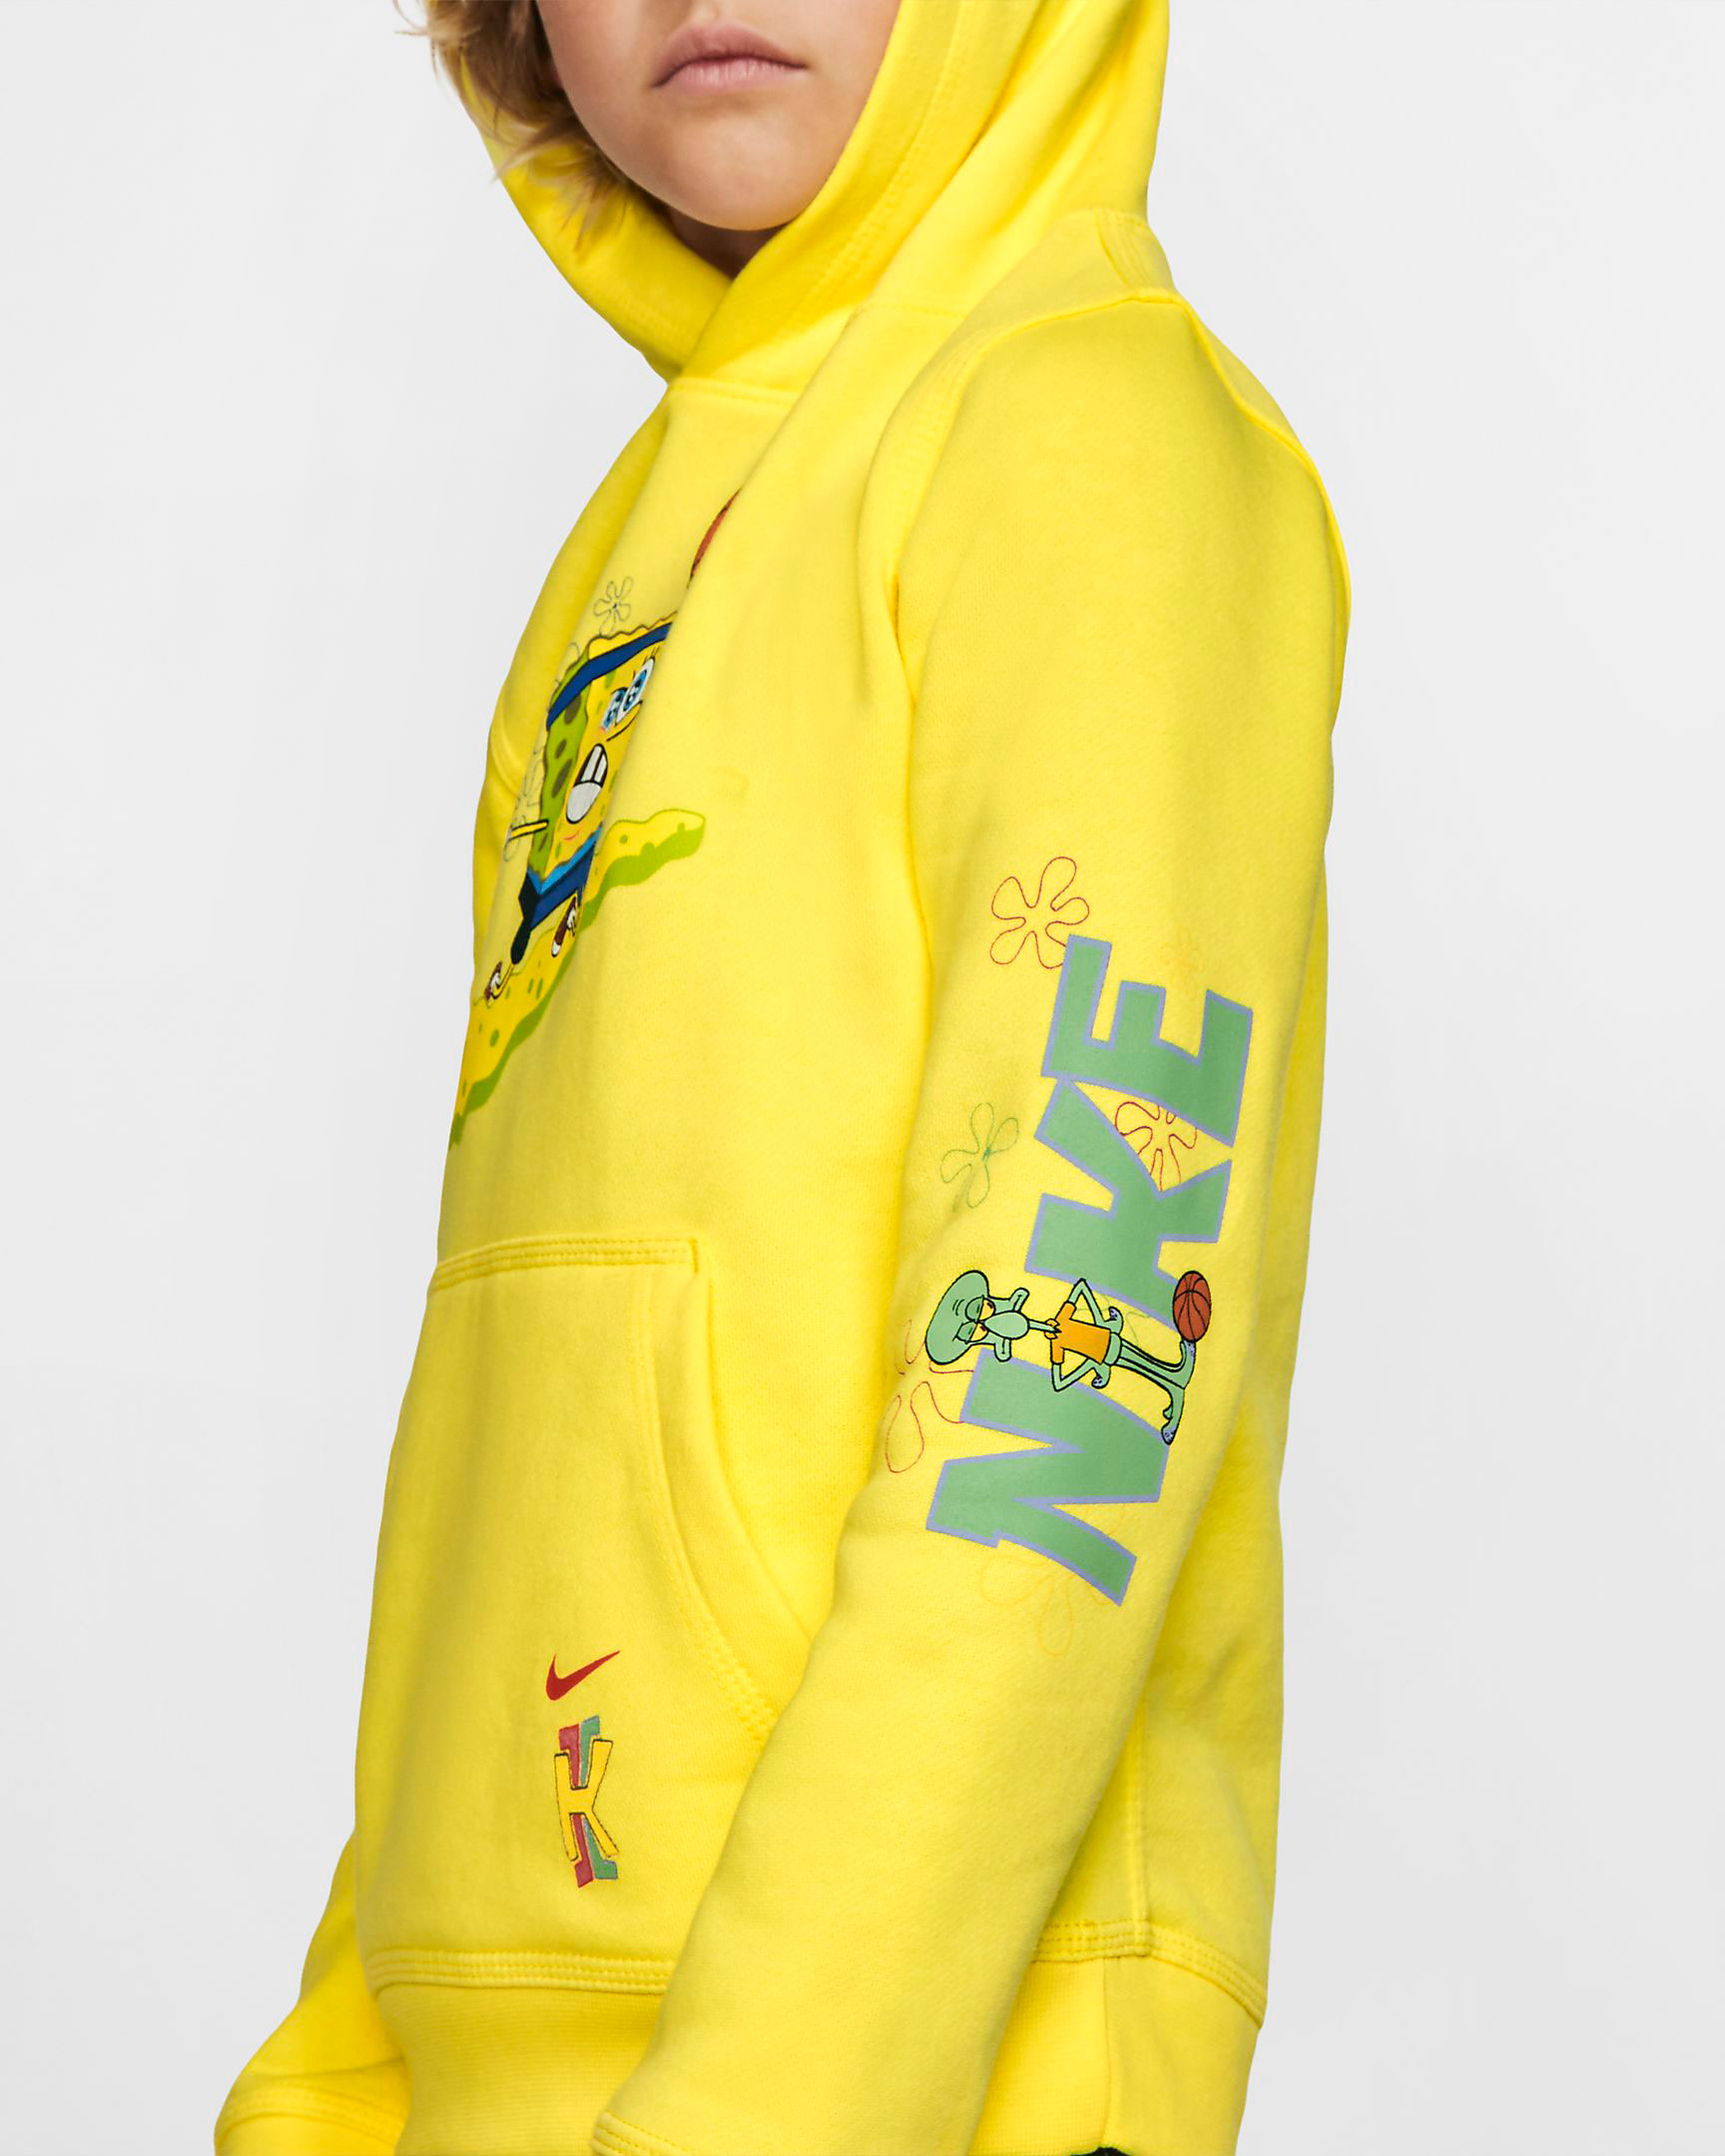 nike spongebob hoodie yellow